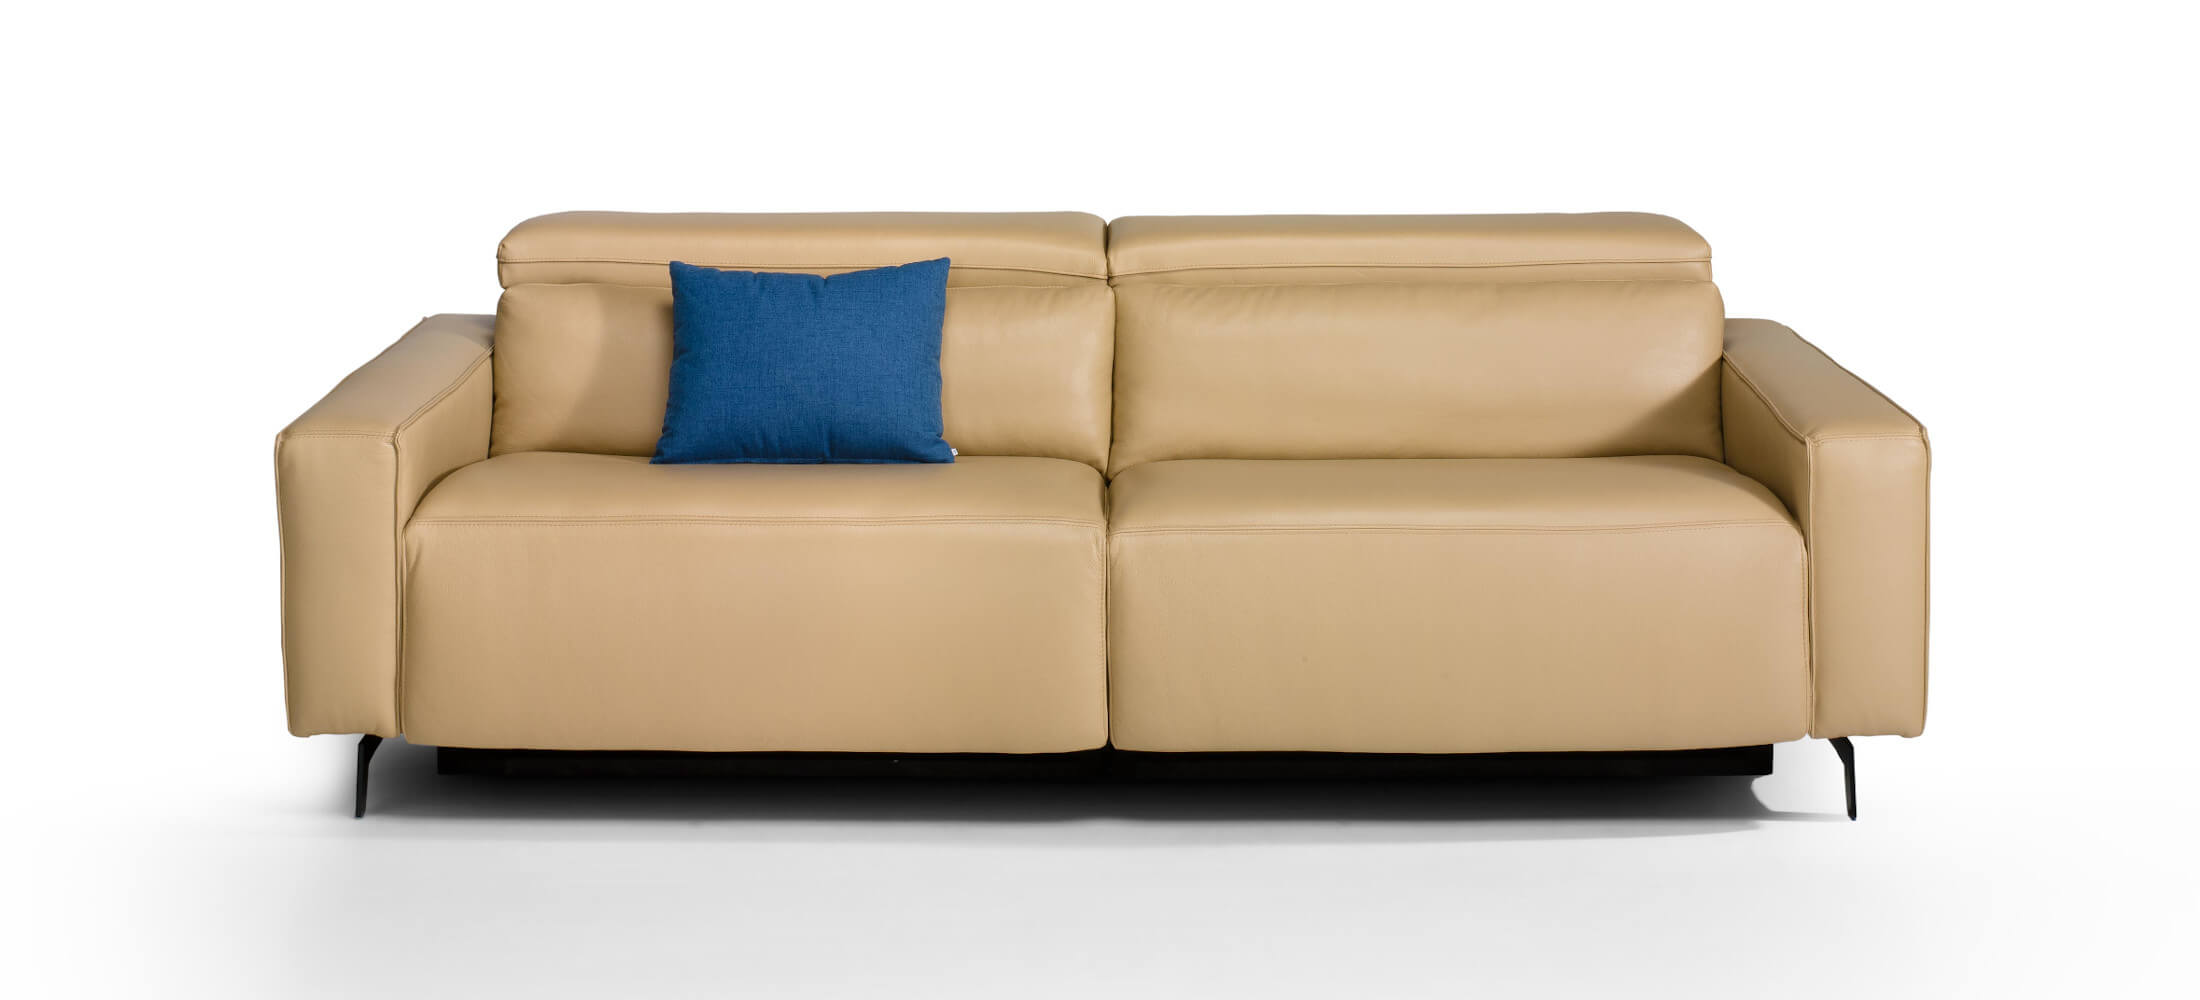 Sofa Shira relax tapissat pell vista frontal